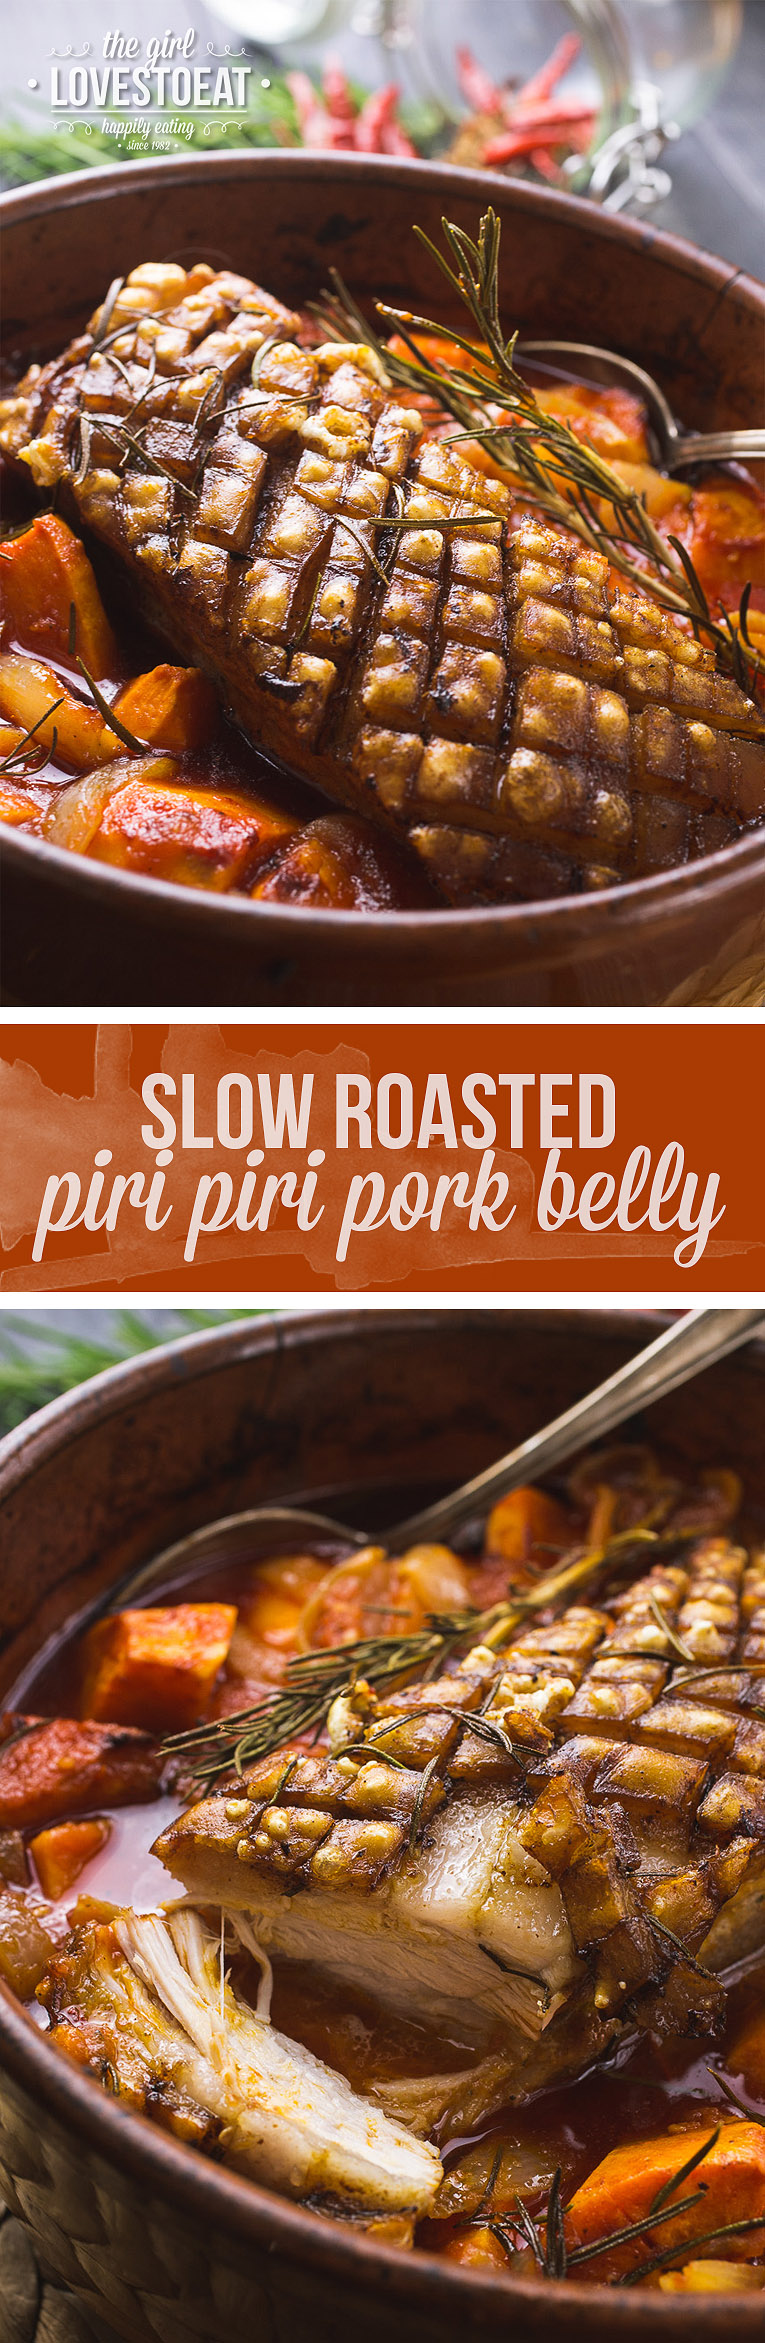 Slow roasted piri piri pork belly { thegirllovestoeat.com }